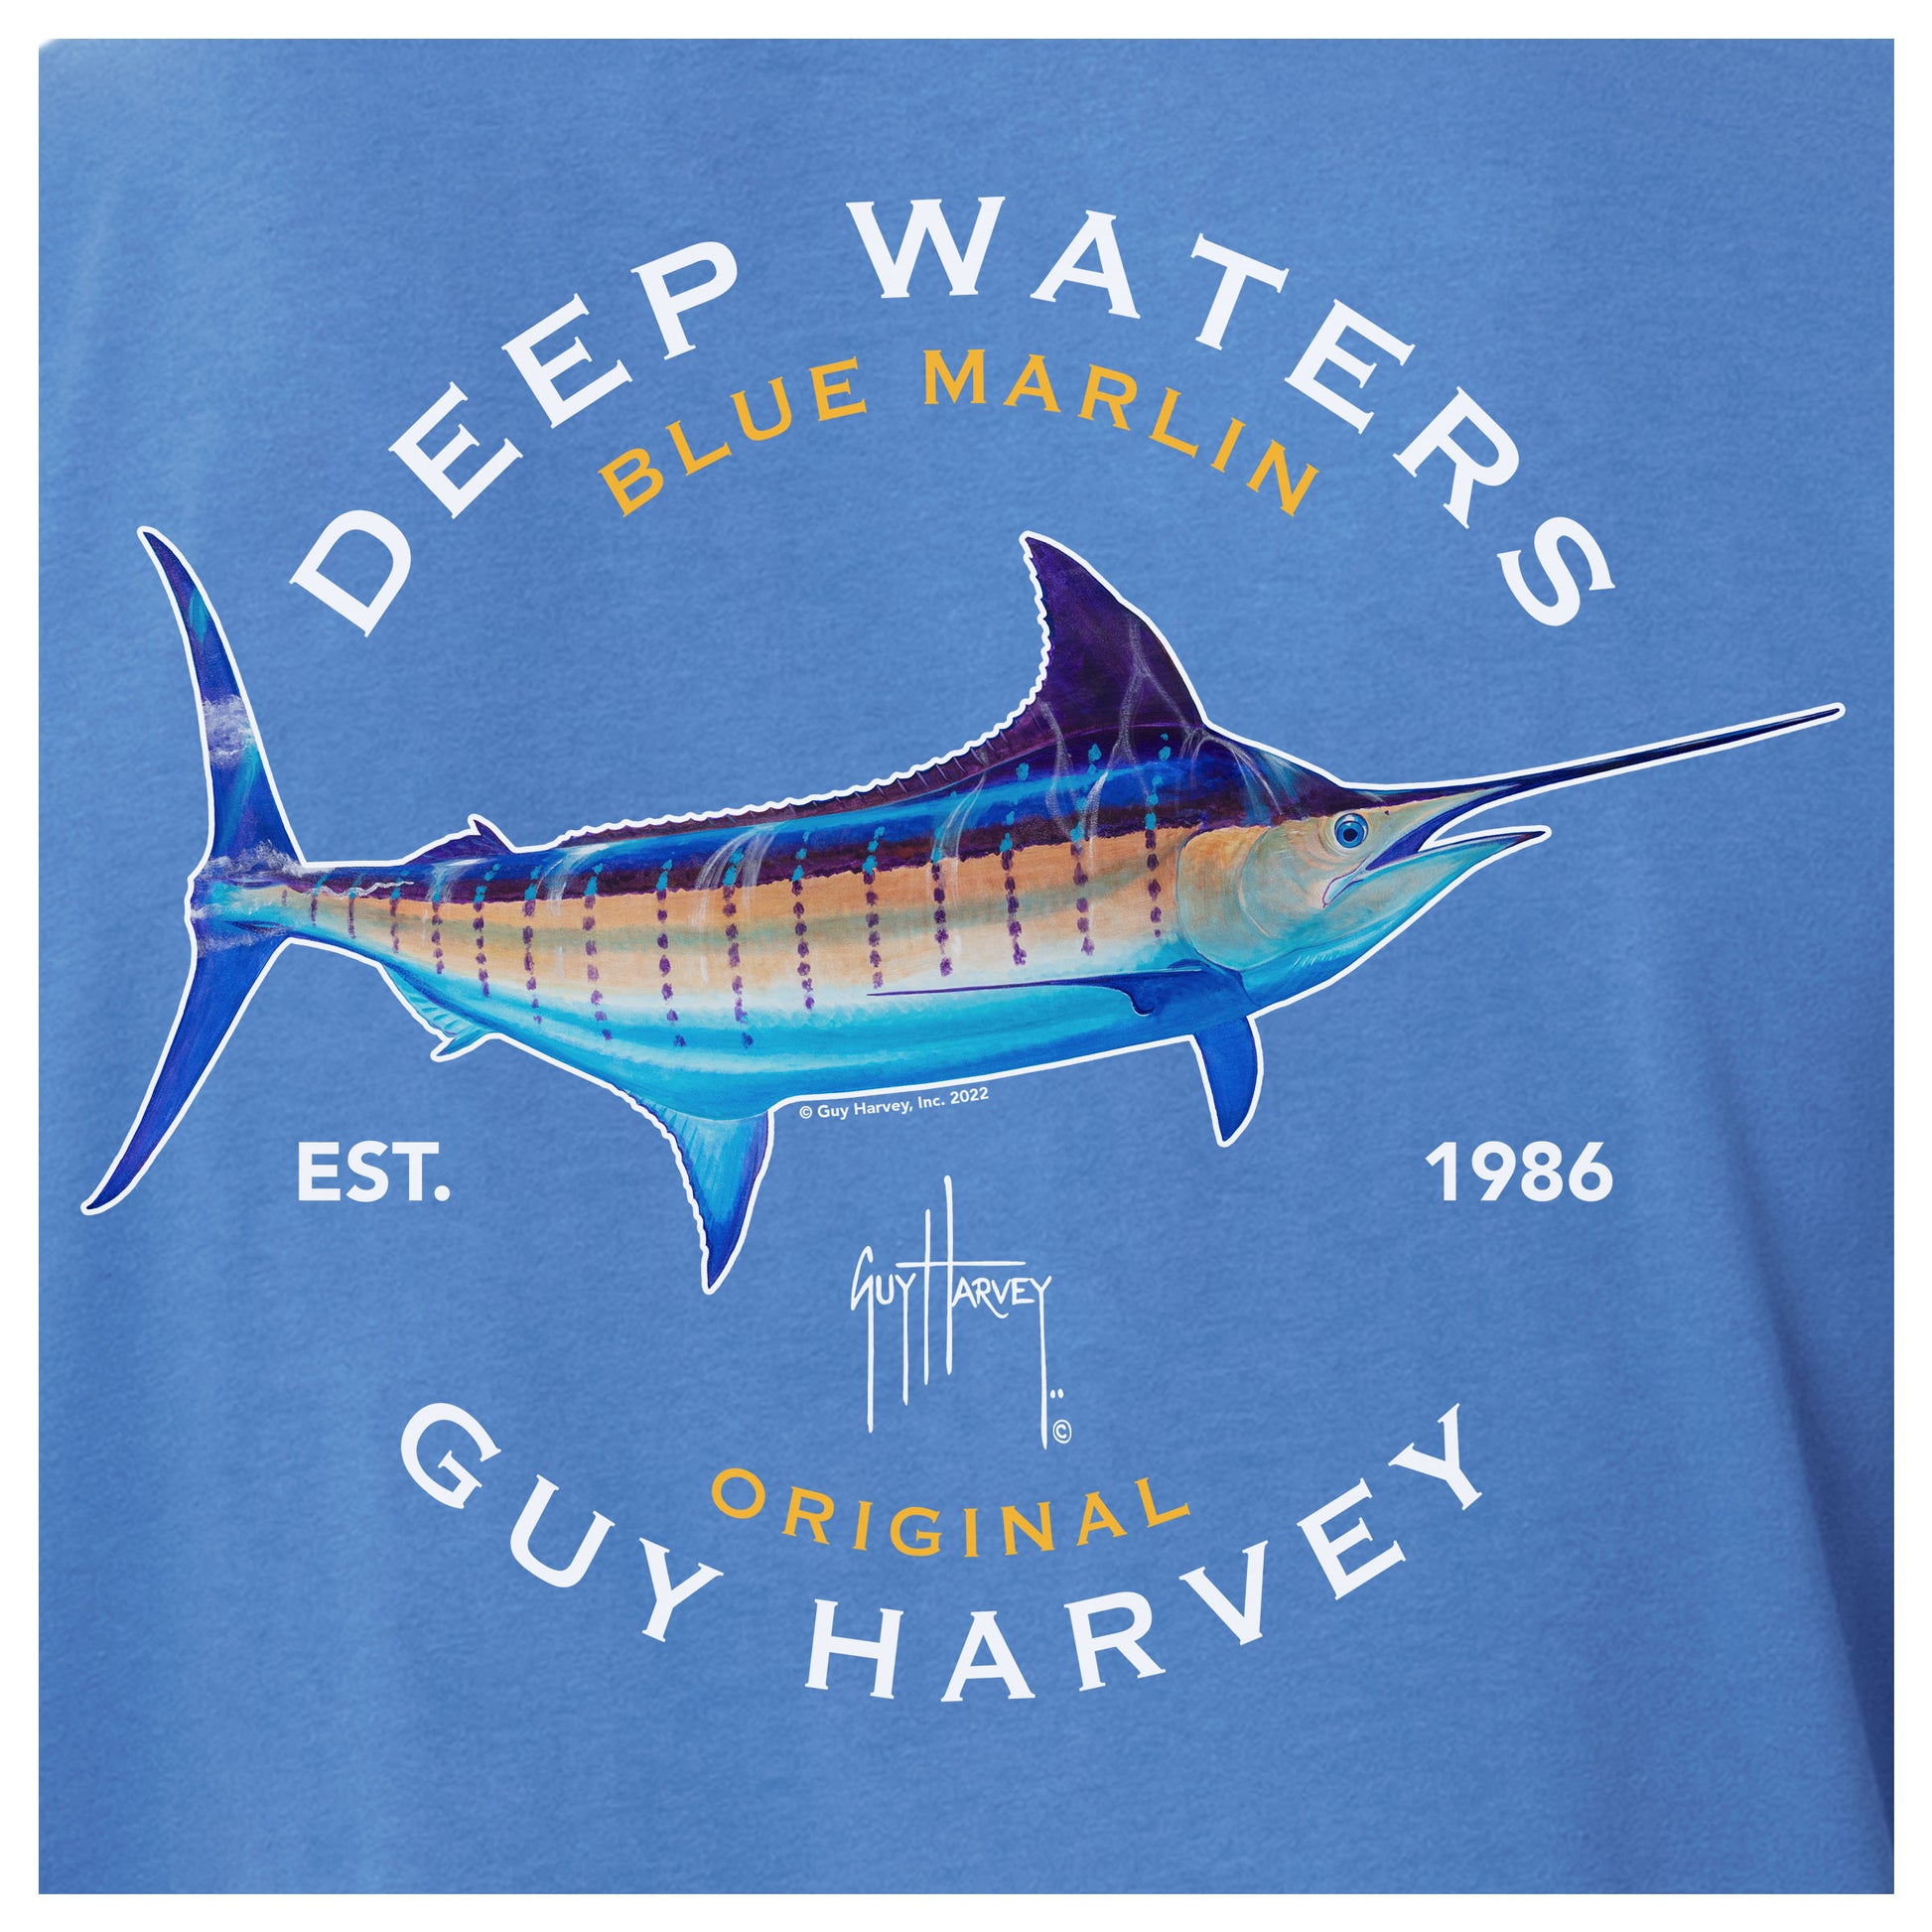 Guy Harvey Mens Offshore Fish Collection Long Sleeve T-Shirt - Azure Blue 3X Large, Men's, Size: 3XL